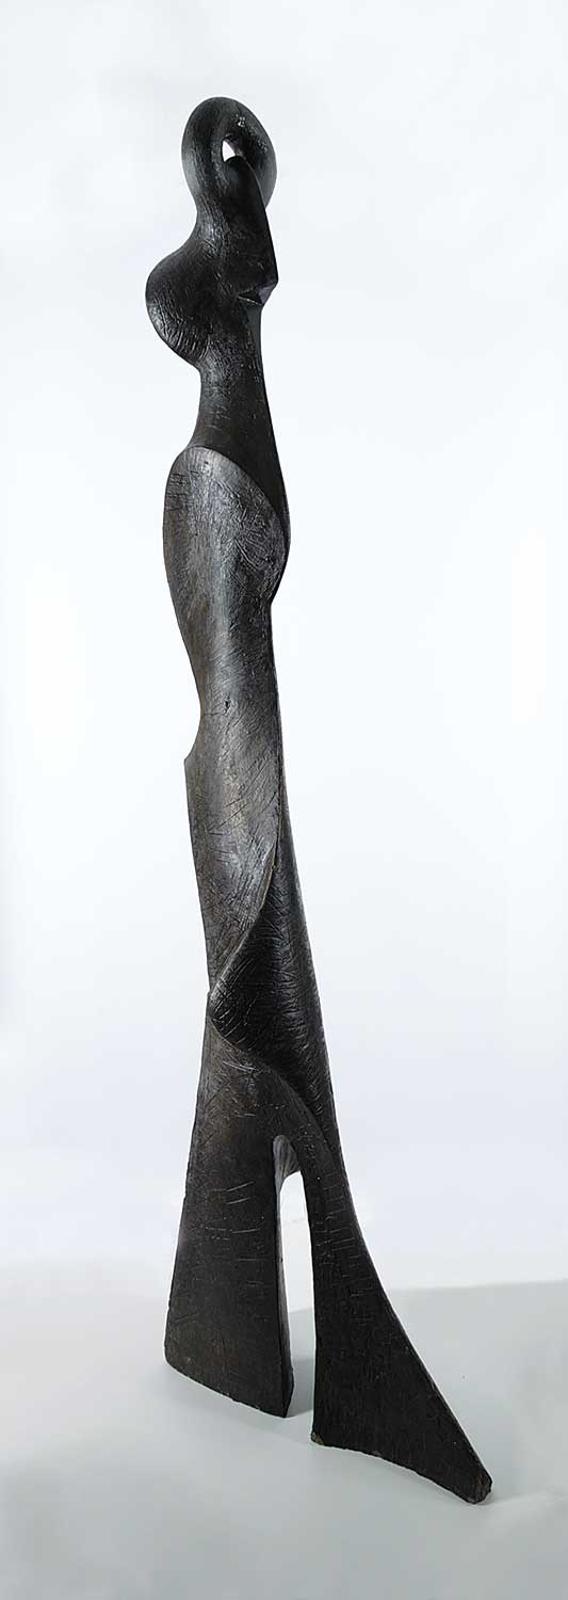 Nicola Anania - Untitled - Striding Male Figure